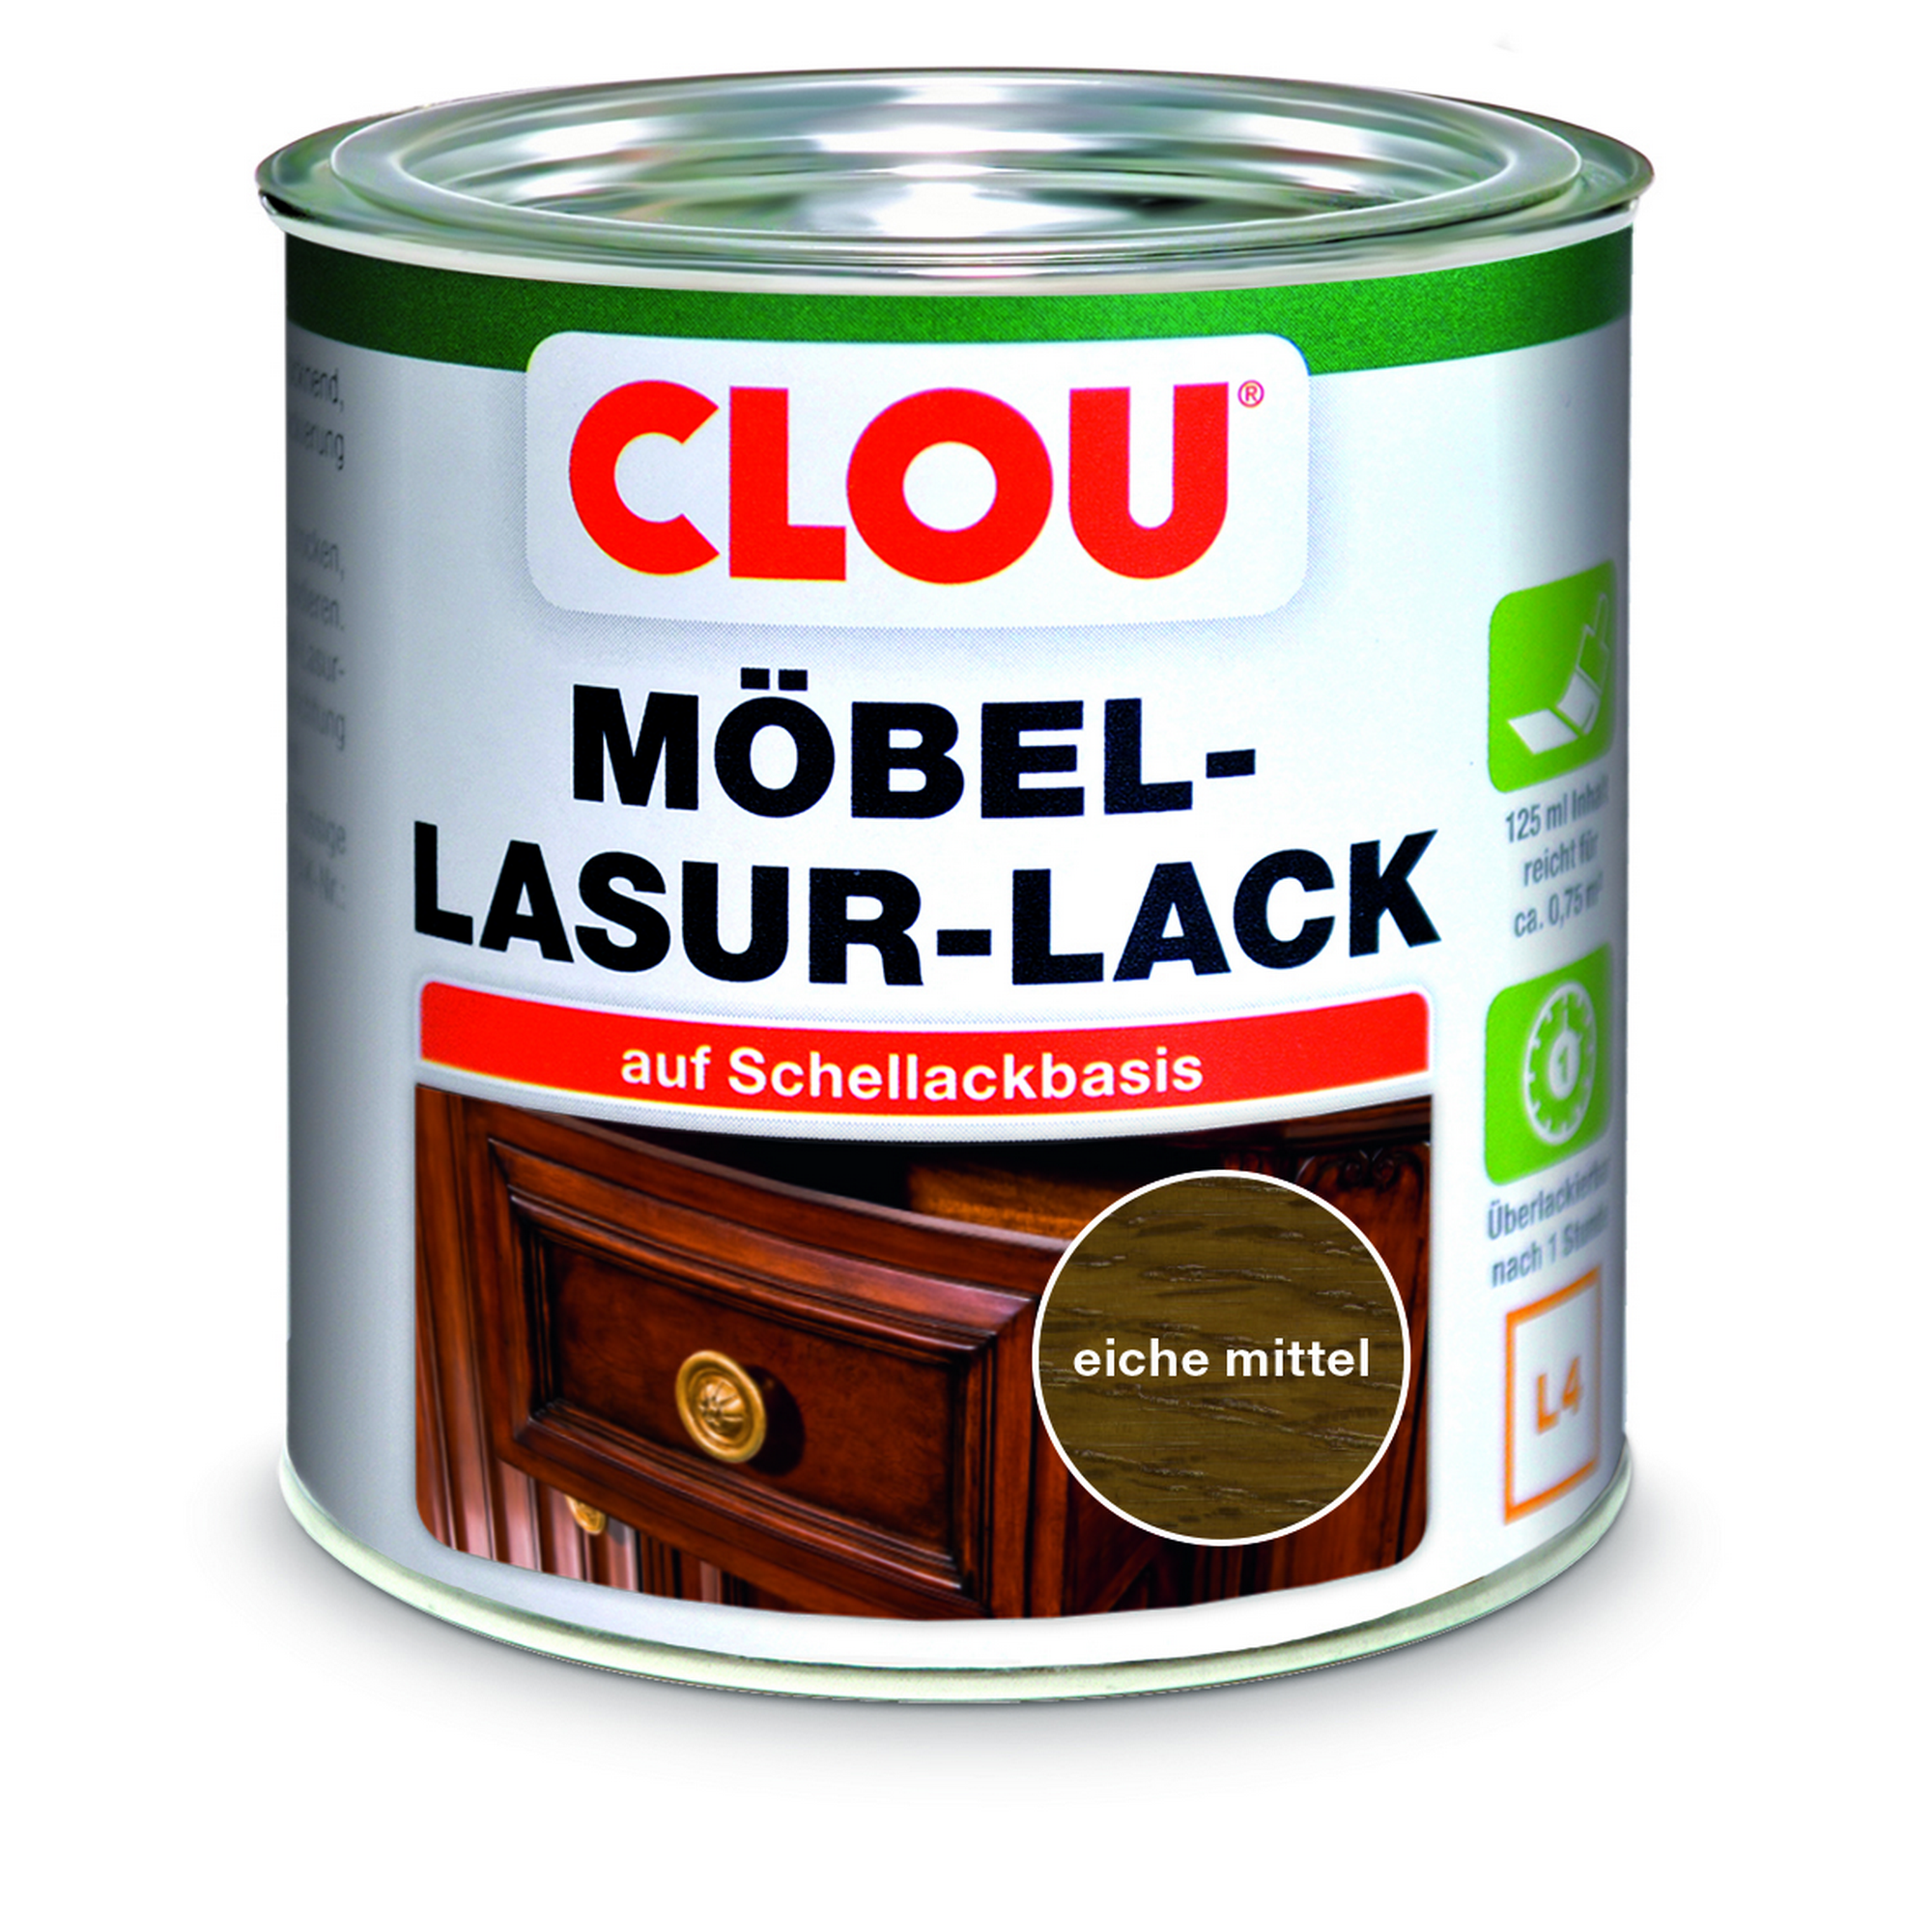 Möbel-Lasurlack eichefarben 125 ml + product picture